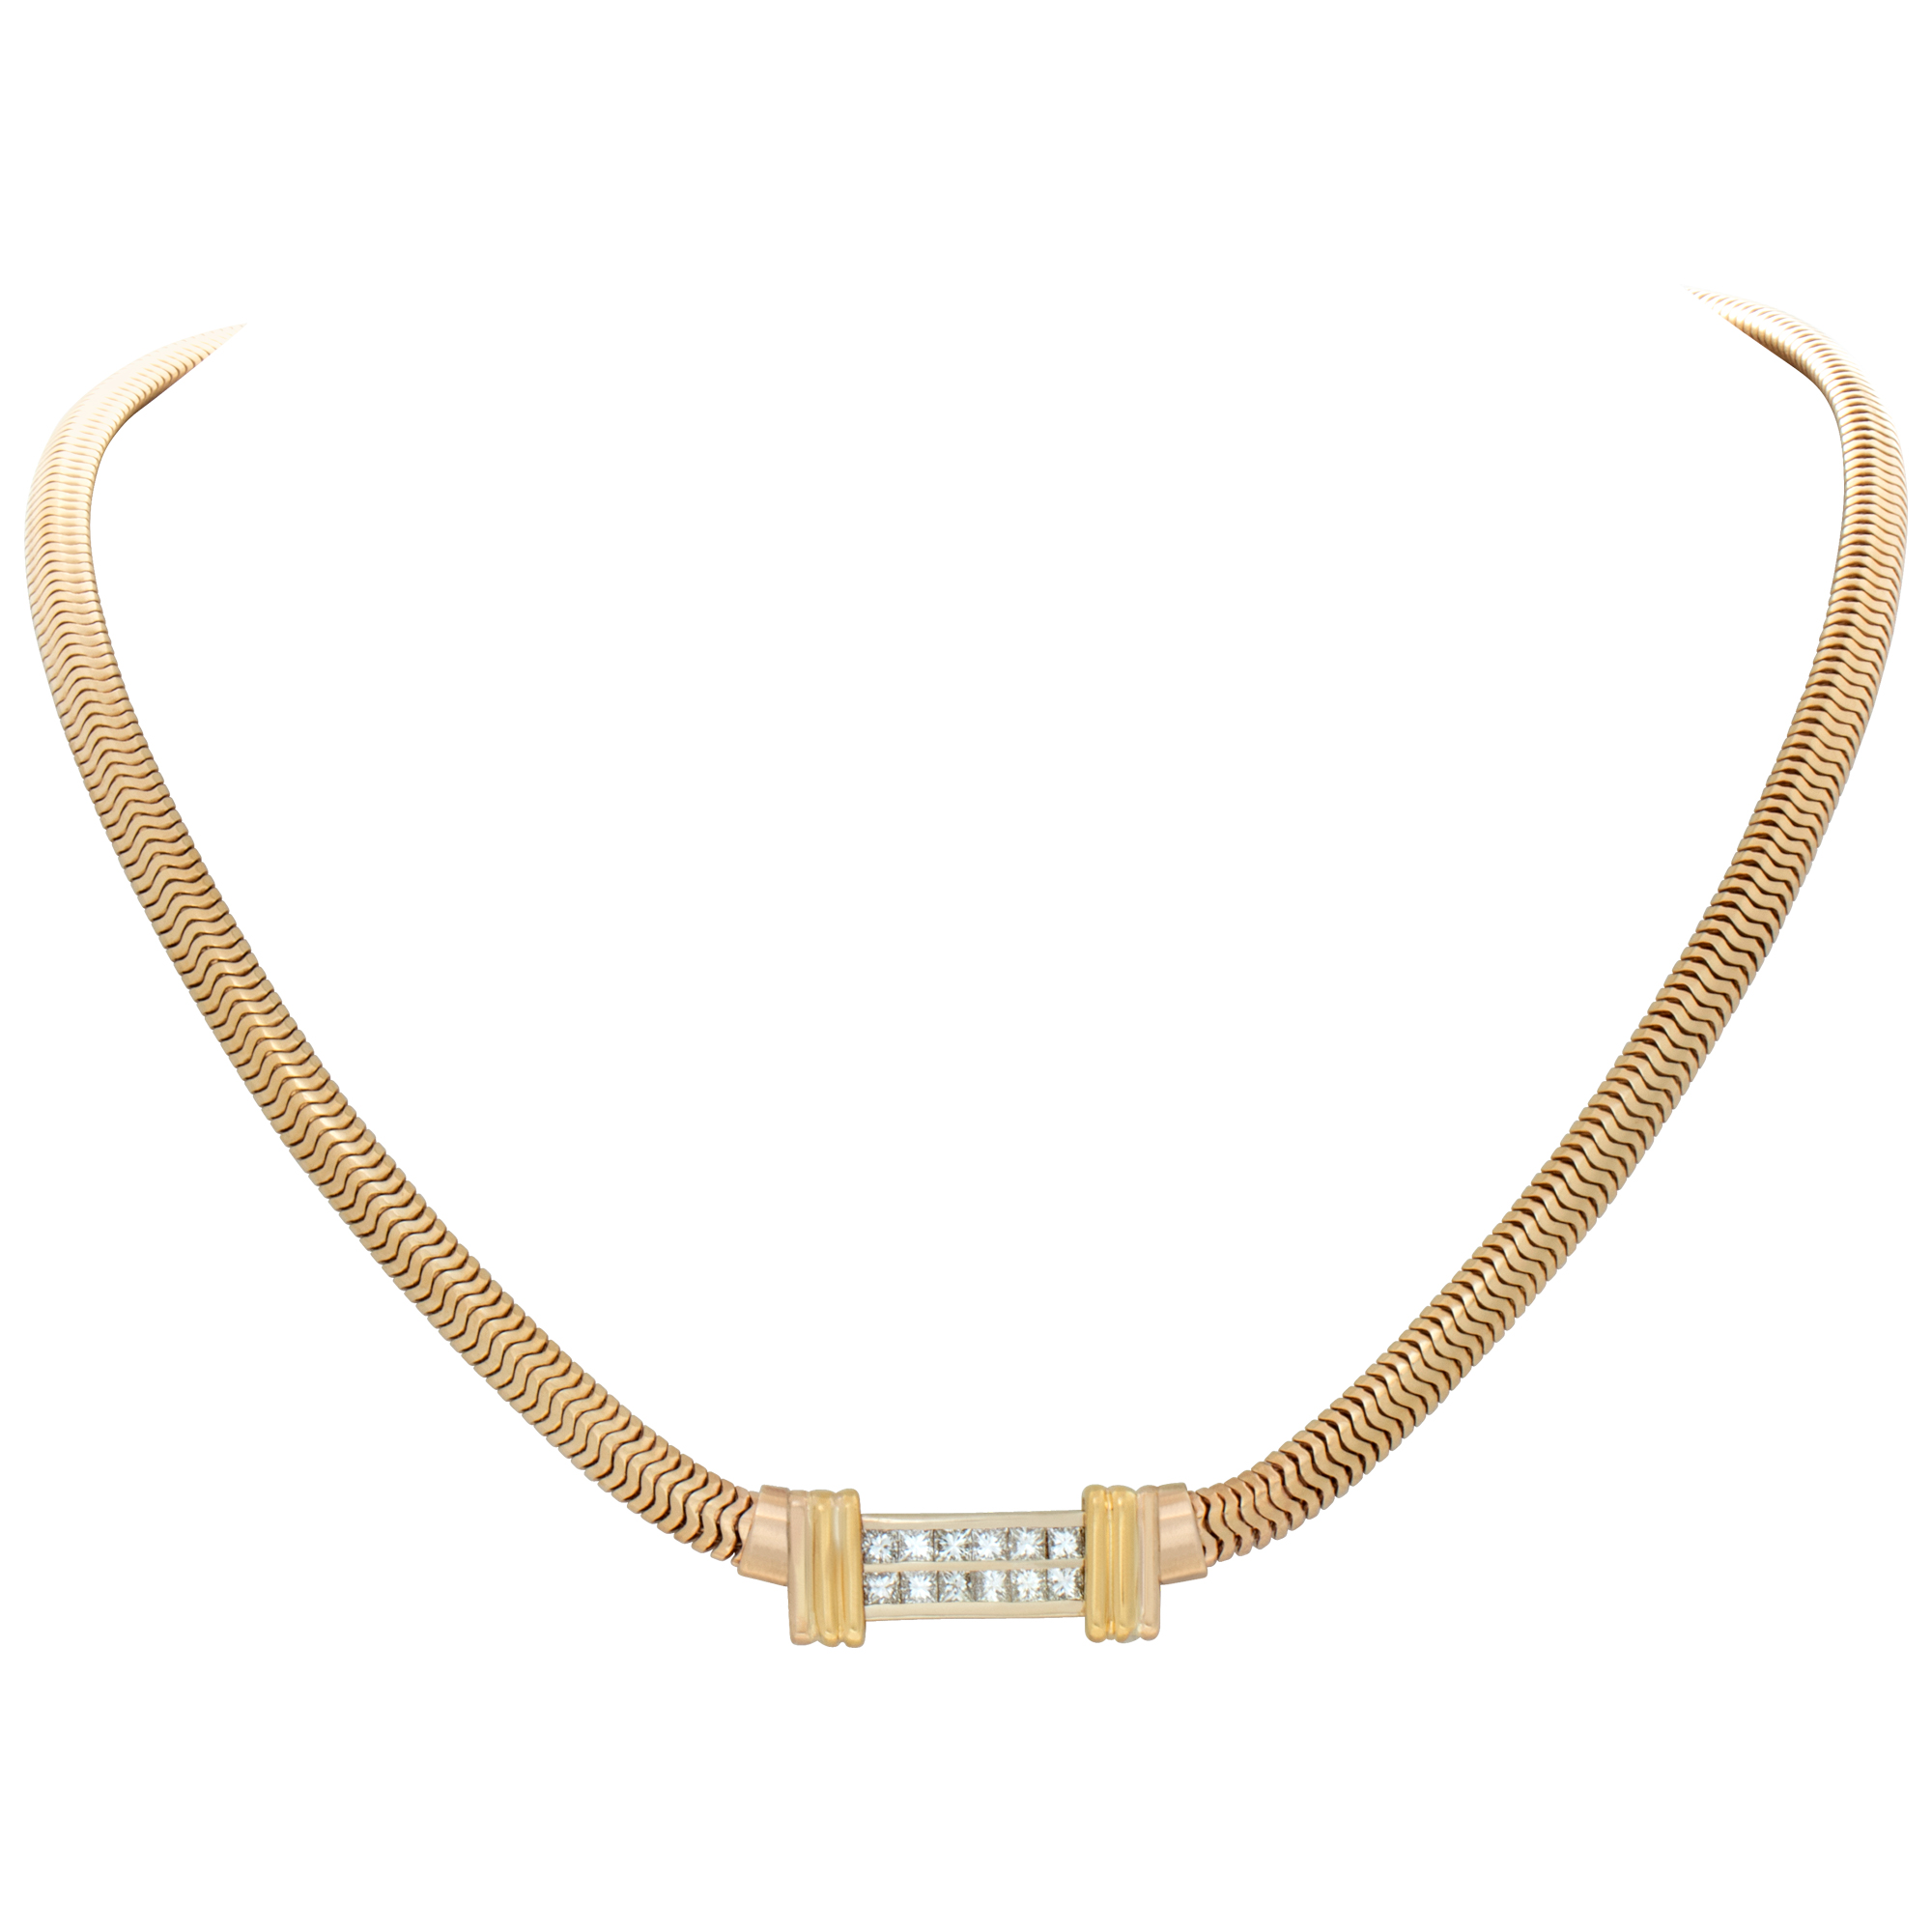 Snake necklace with double row 1.20 carat princess cut diamond bar image 1